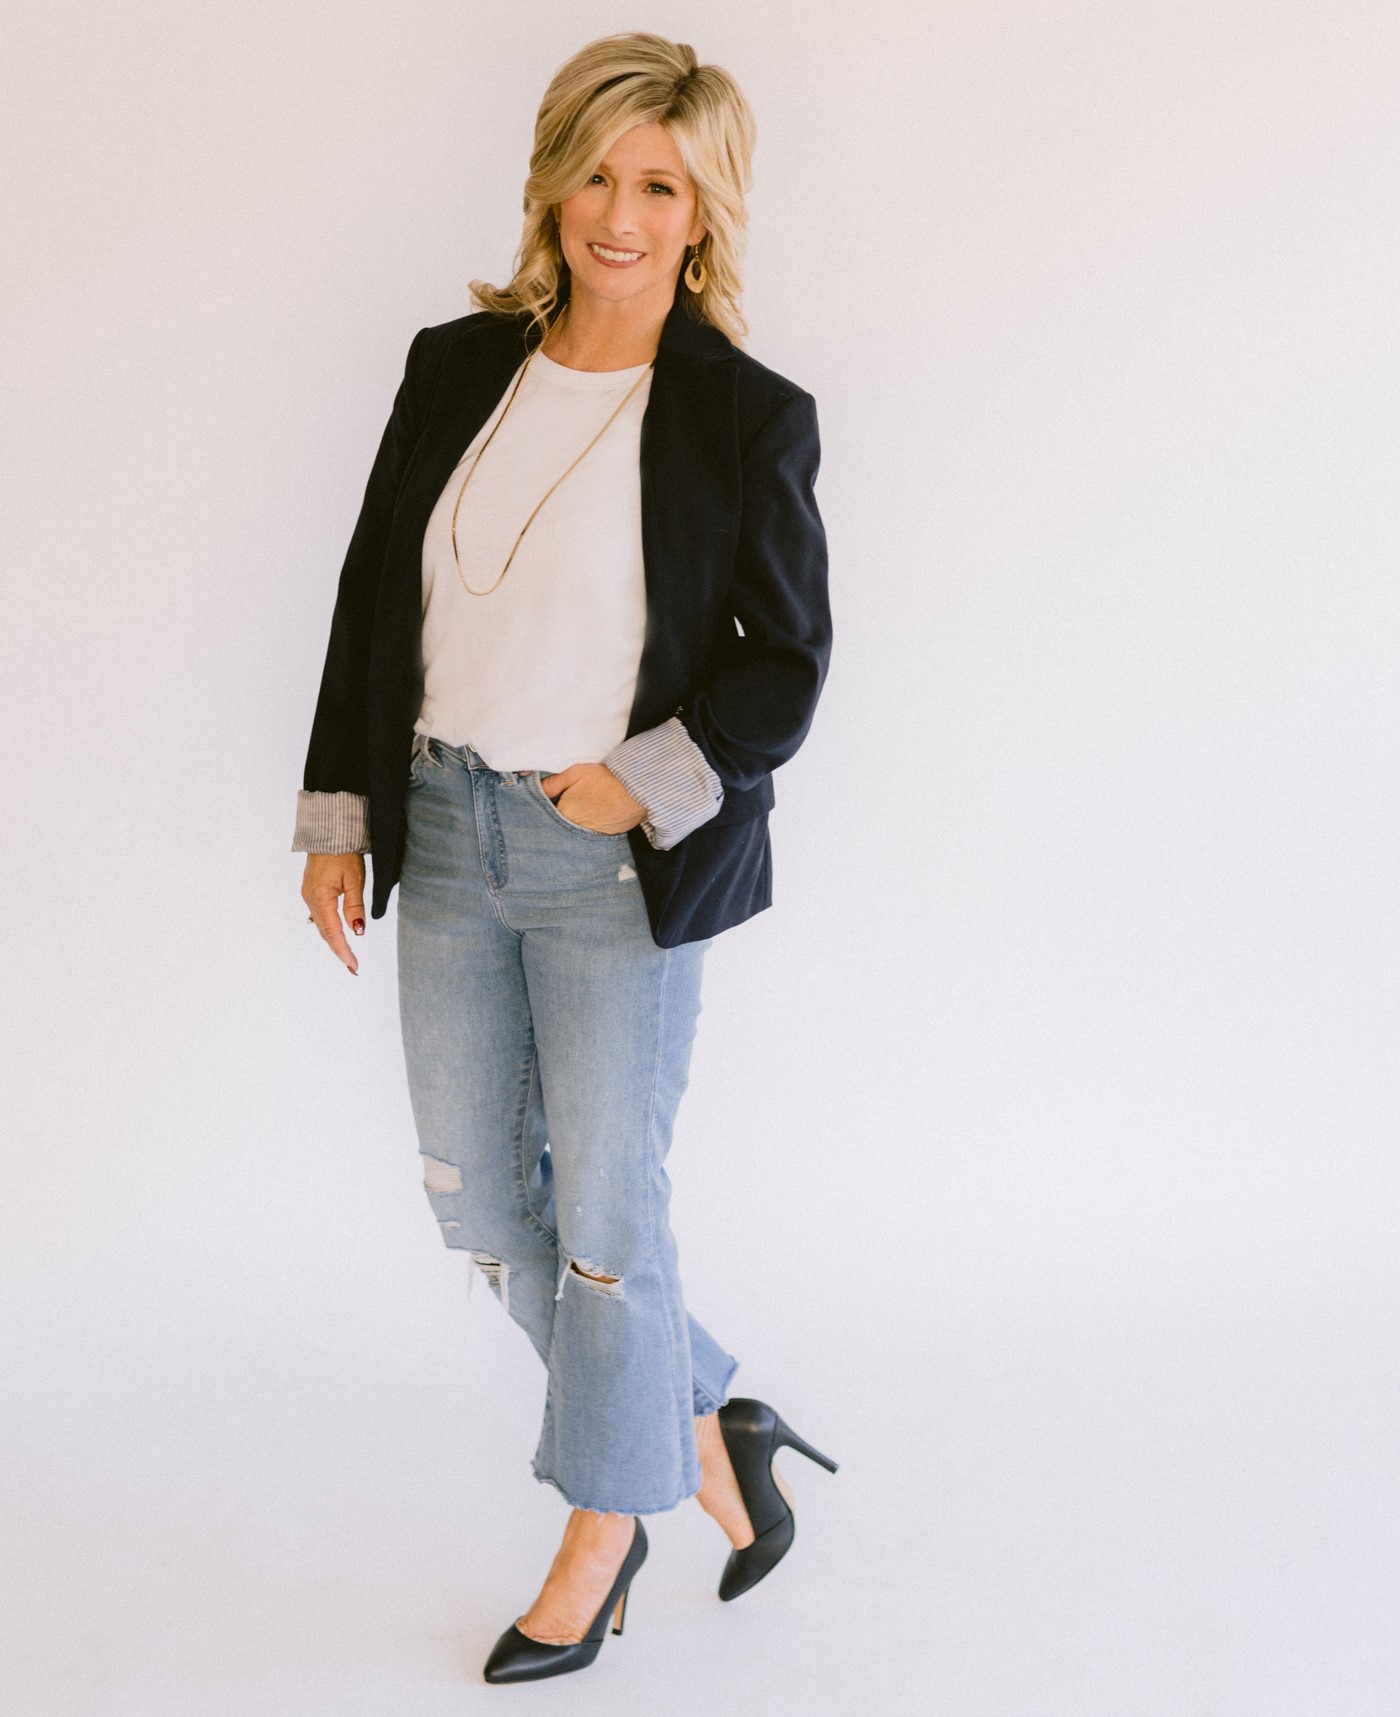 Realtor Danielle Nunes wearing blue jeans, navy blazer, white blouse, with black heels